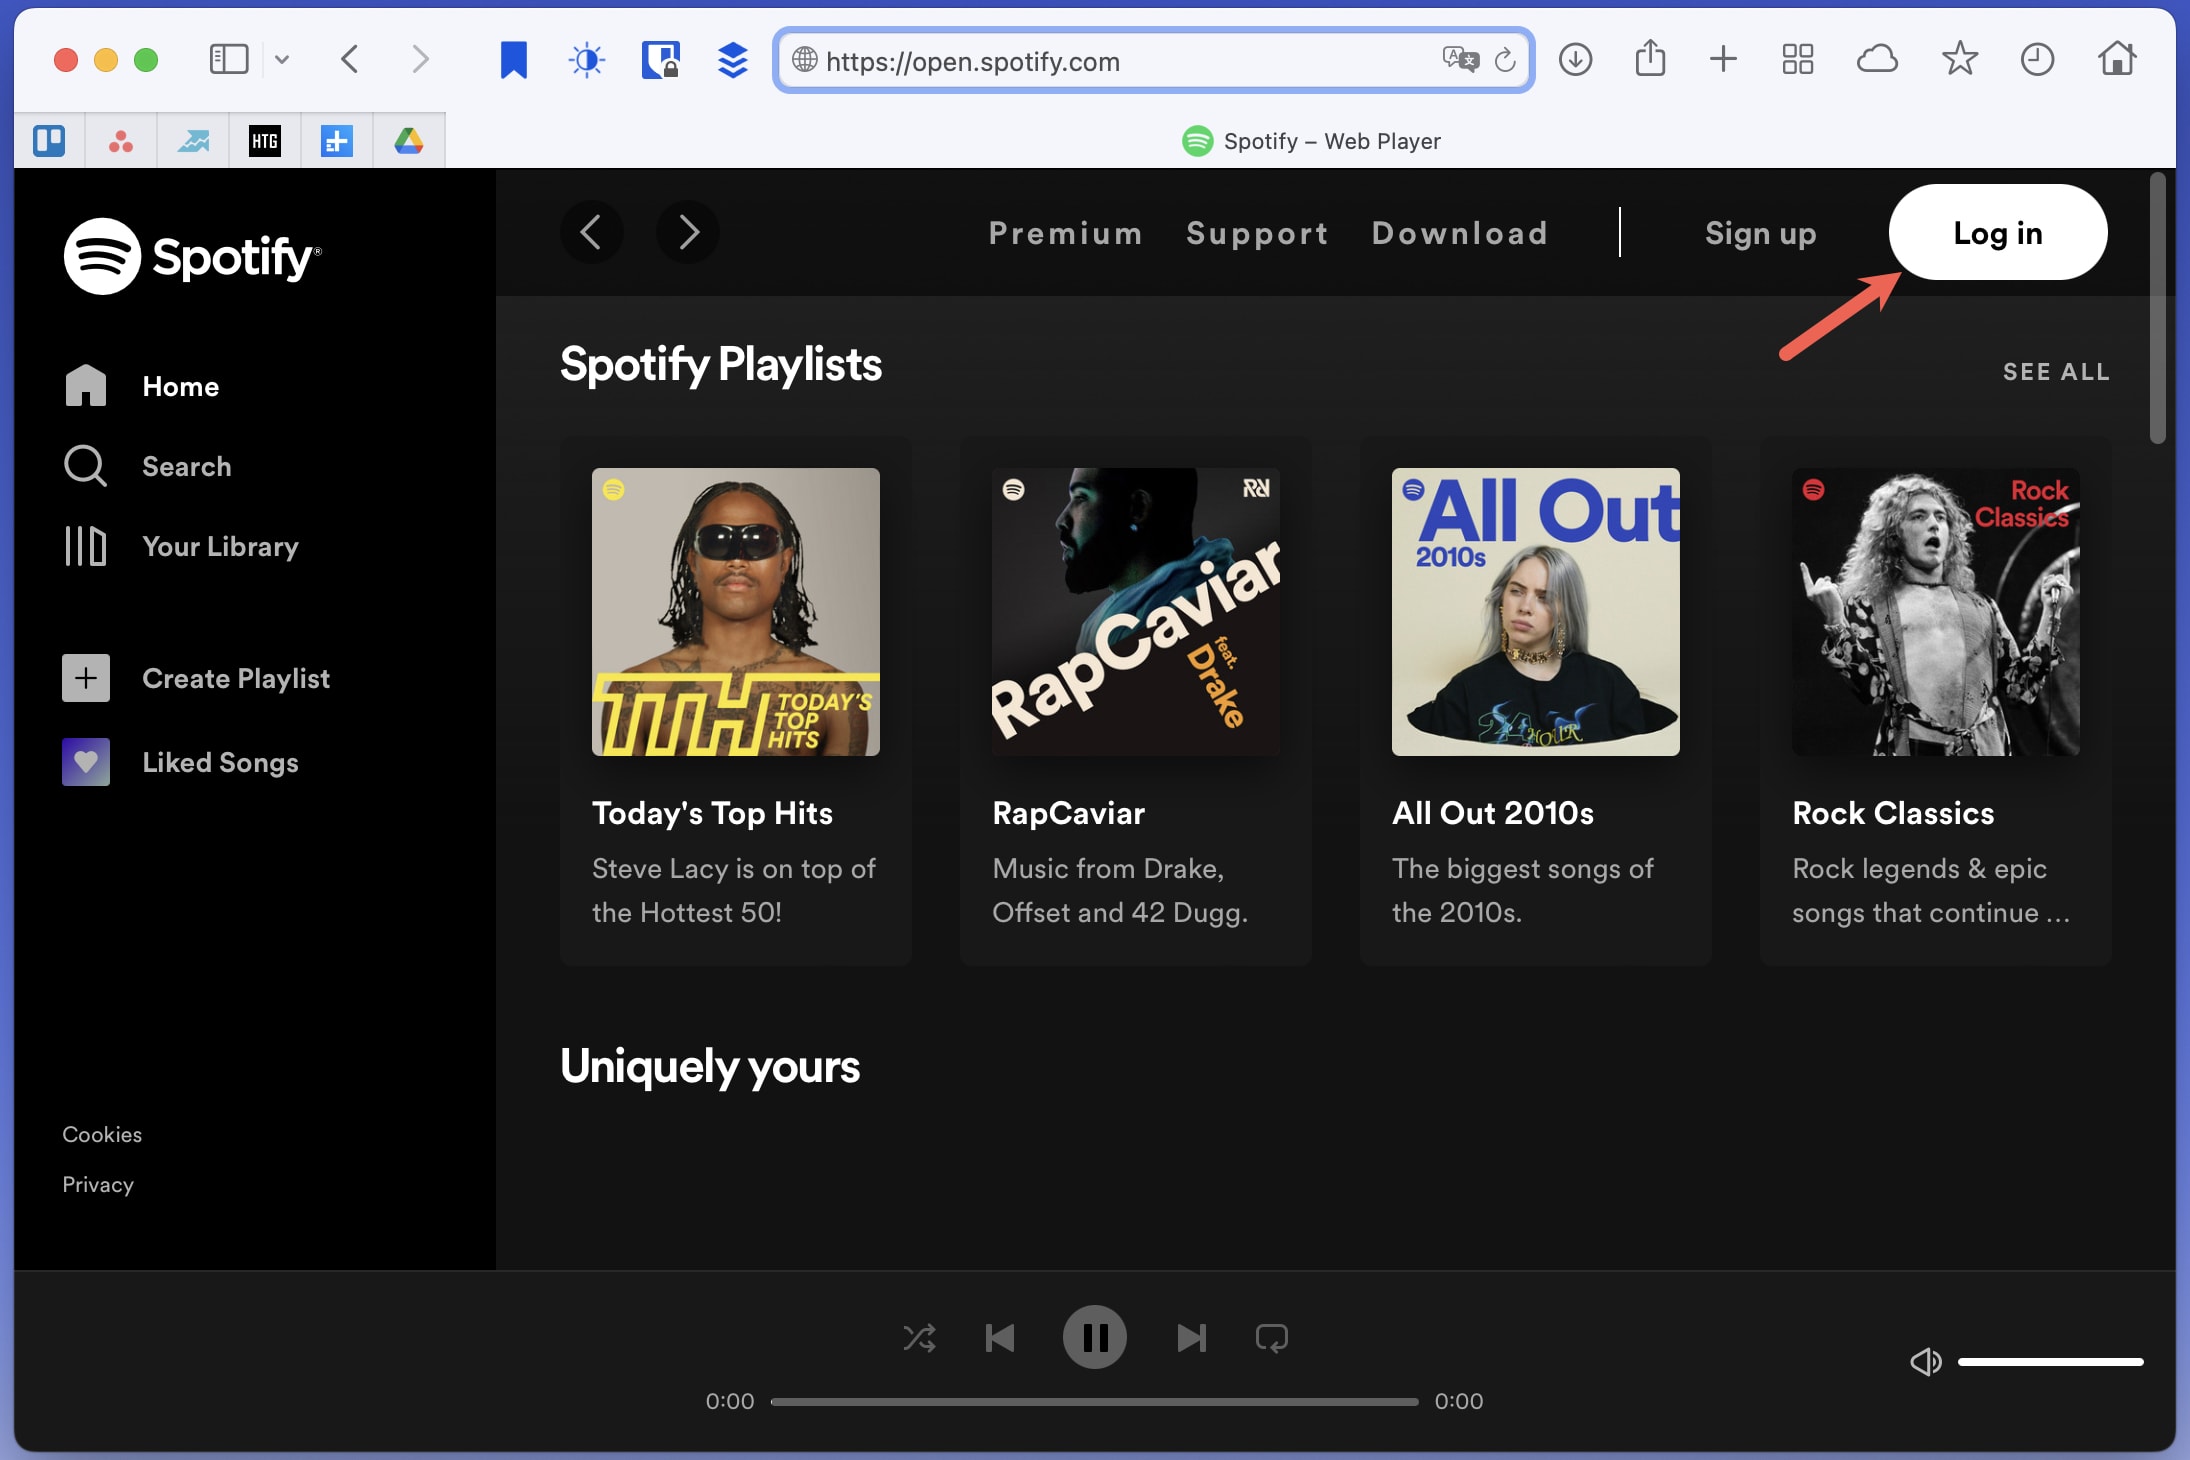 Spotify web player log in screen.